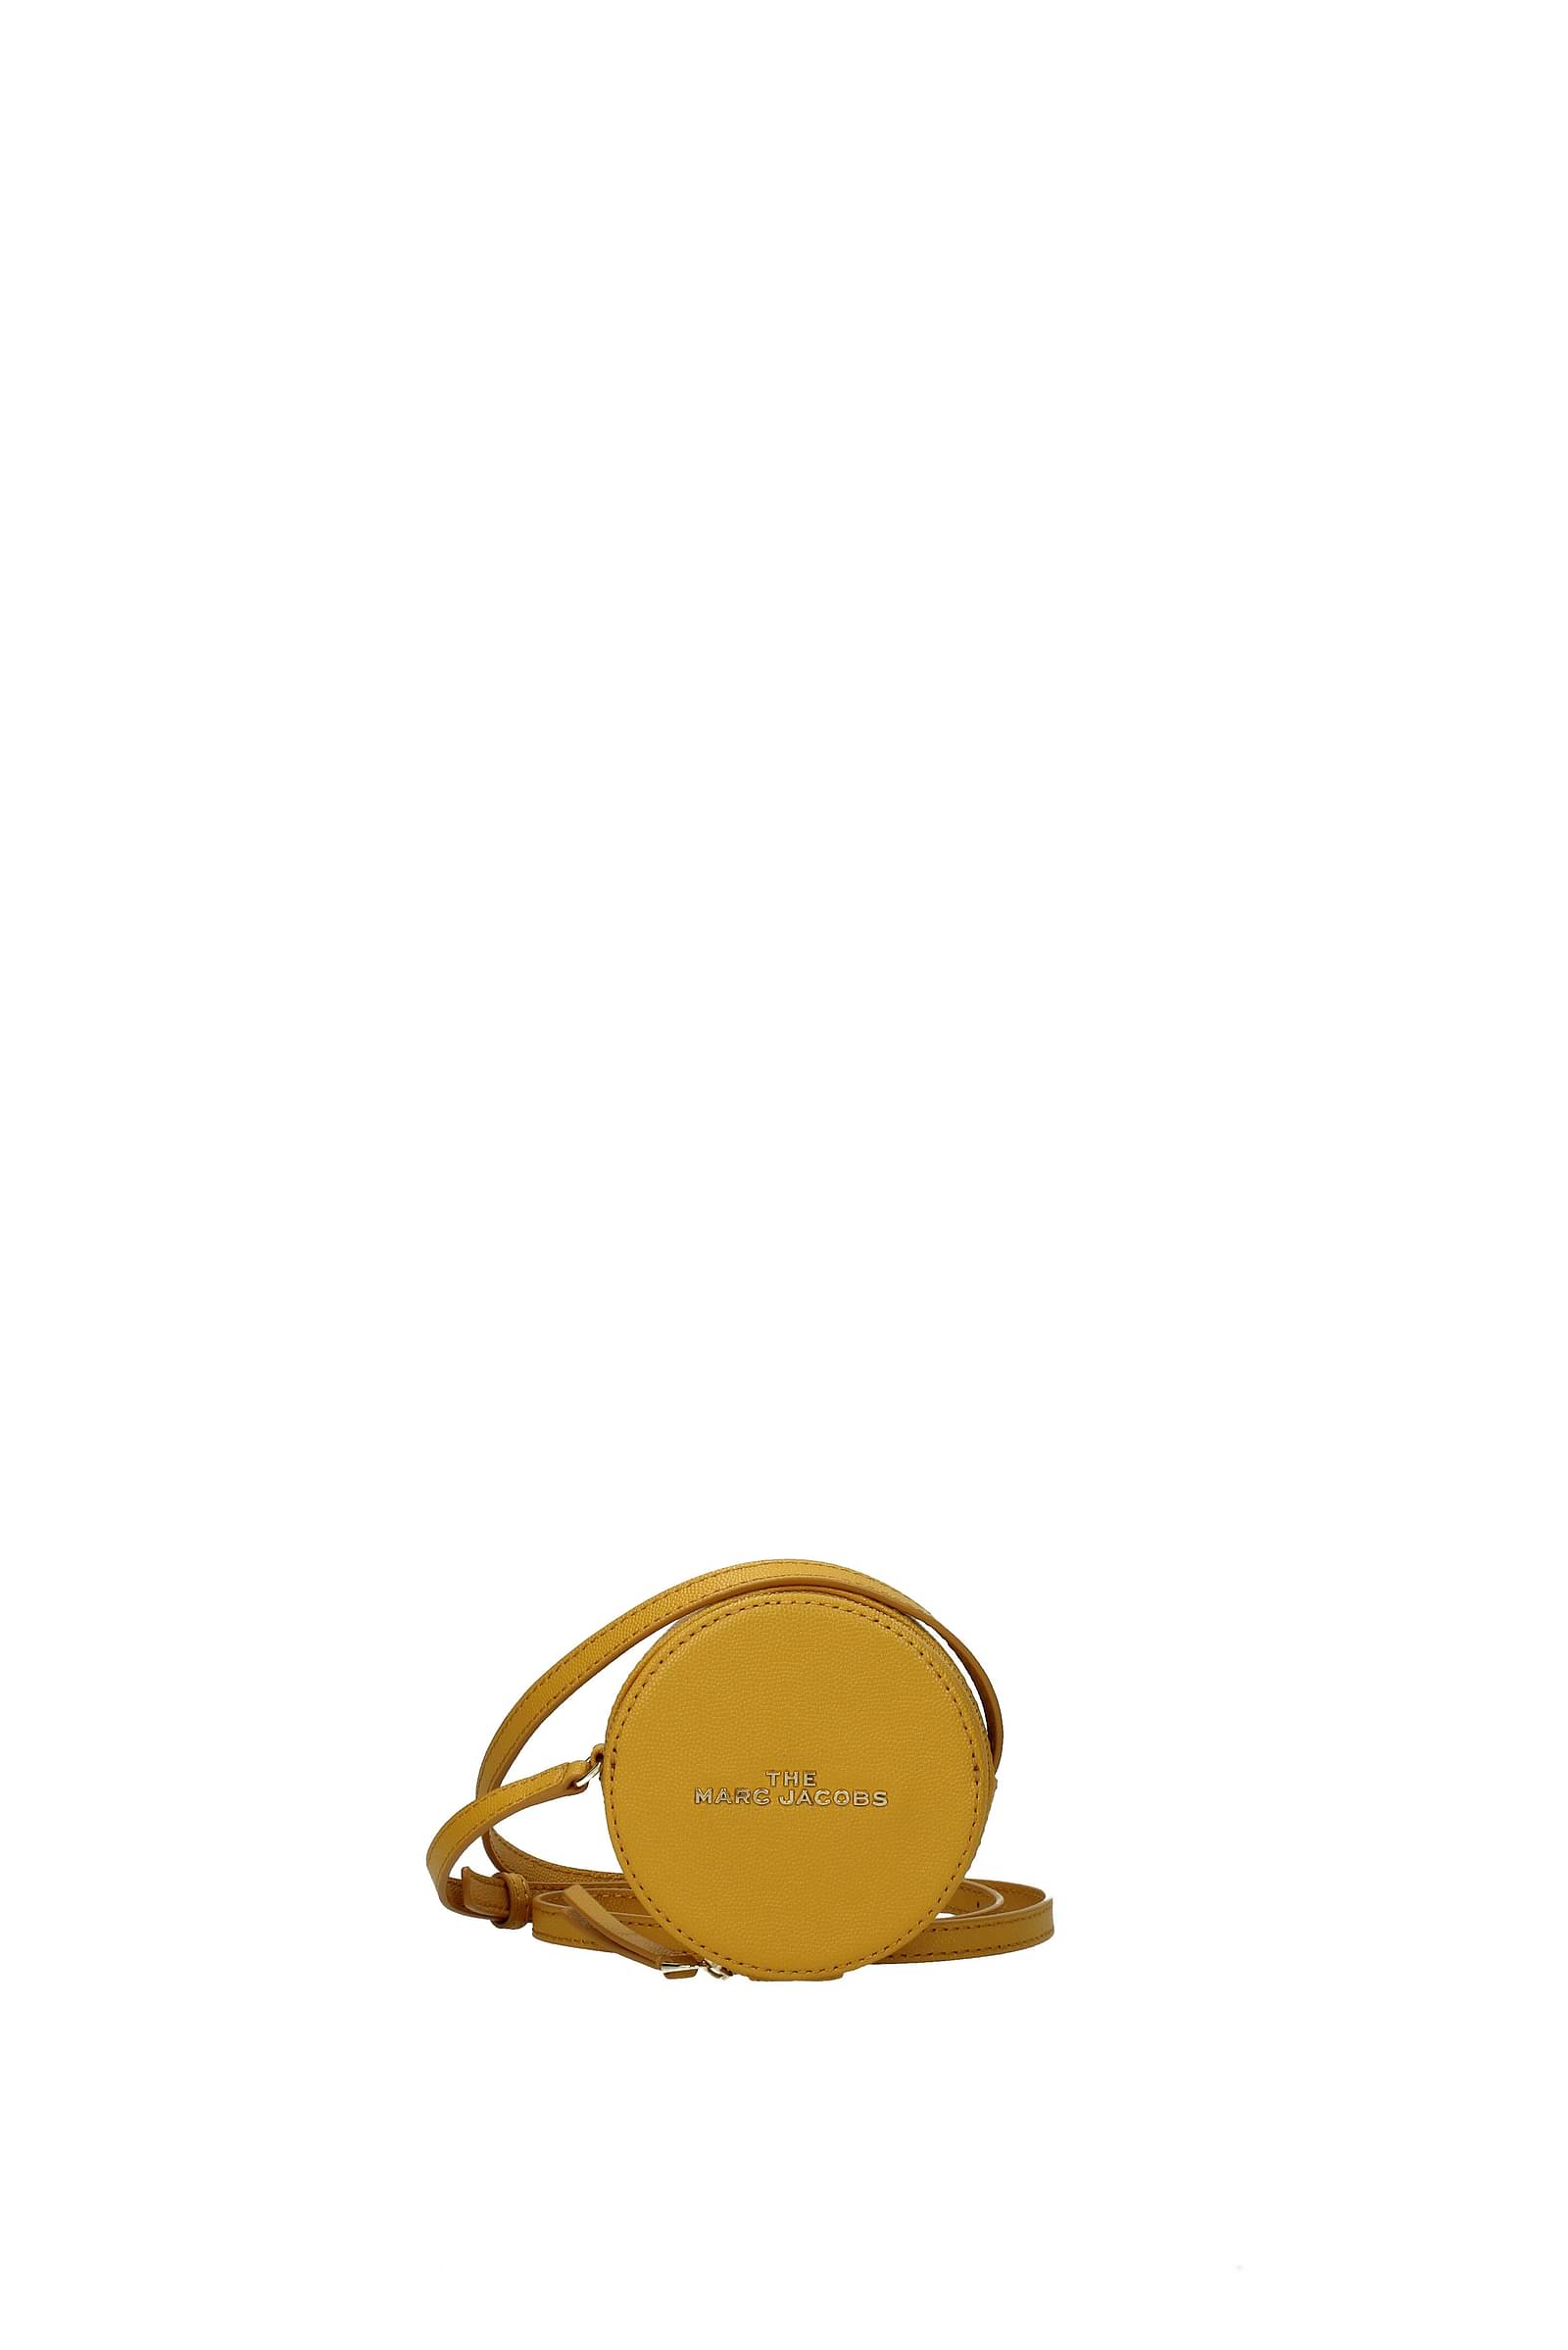 Handbags Marc Jacobs, Style code: m0014278-710-A778